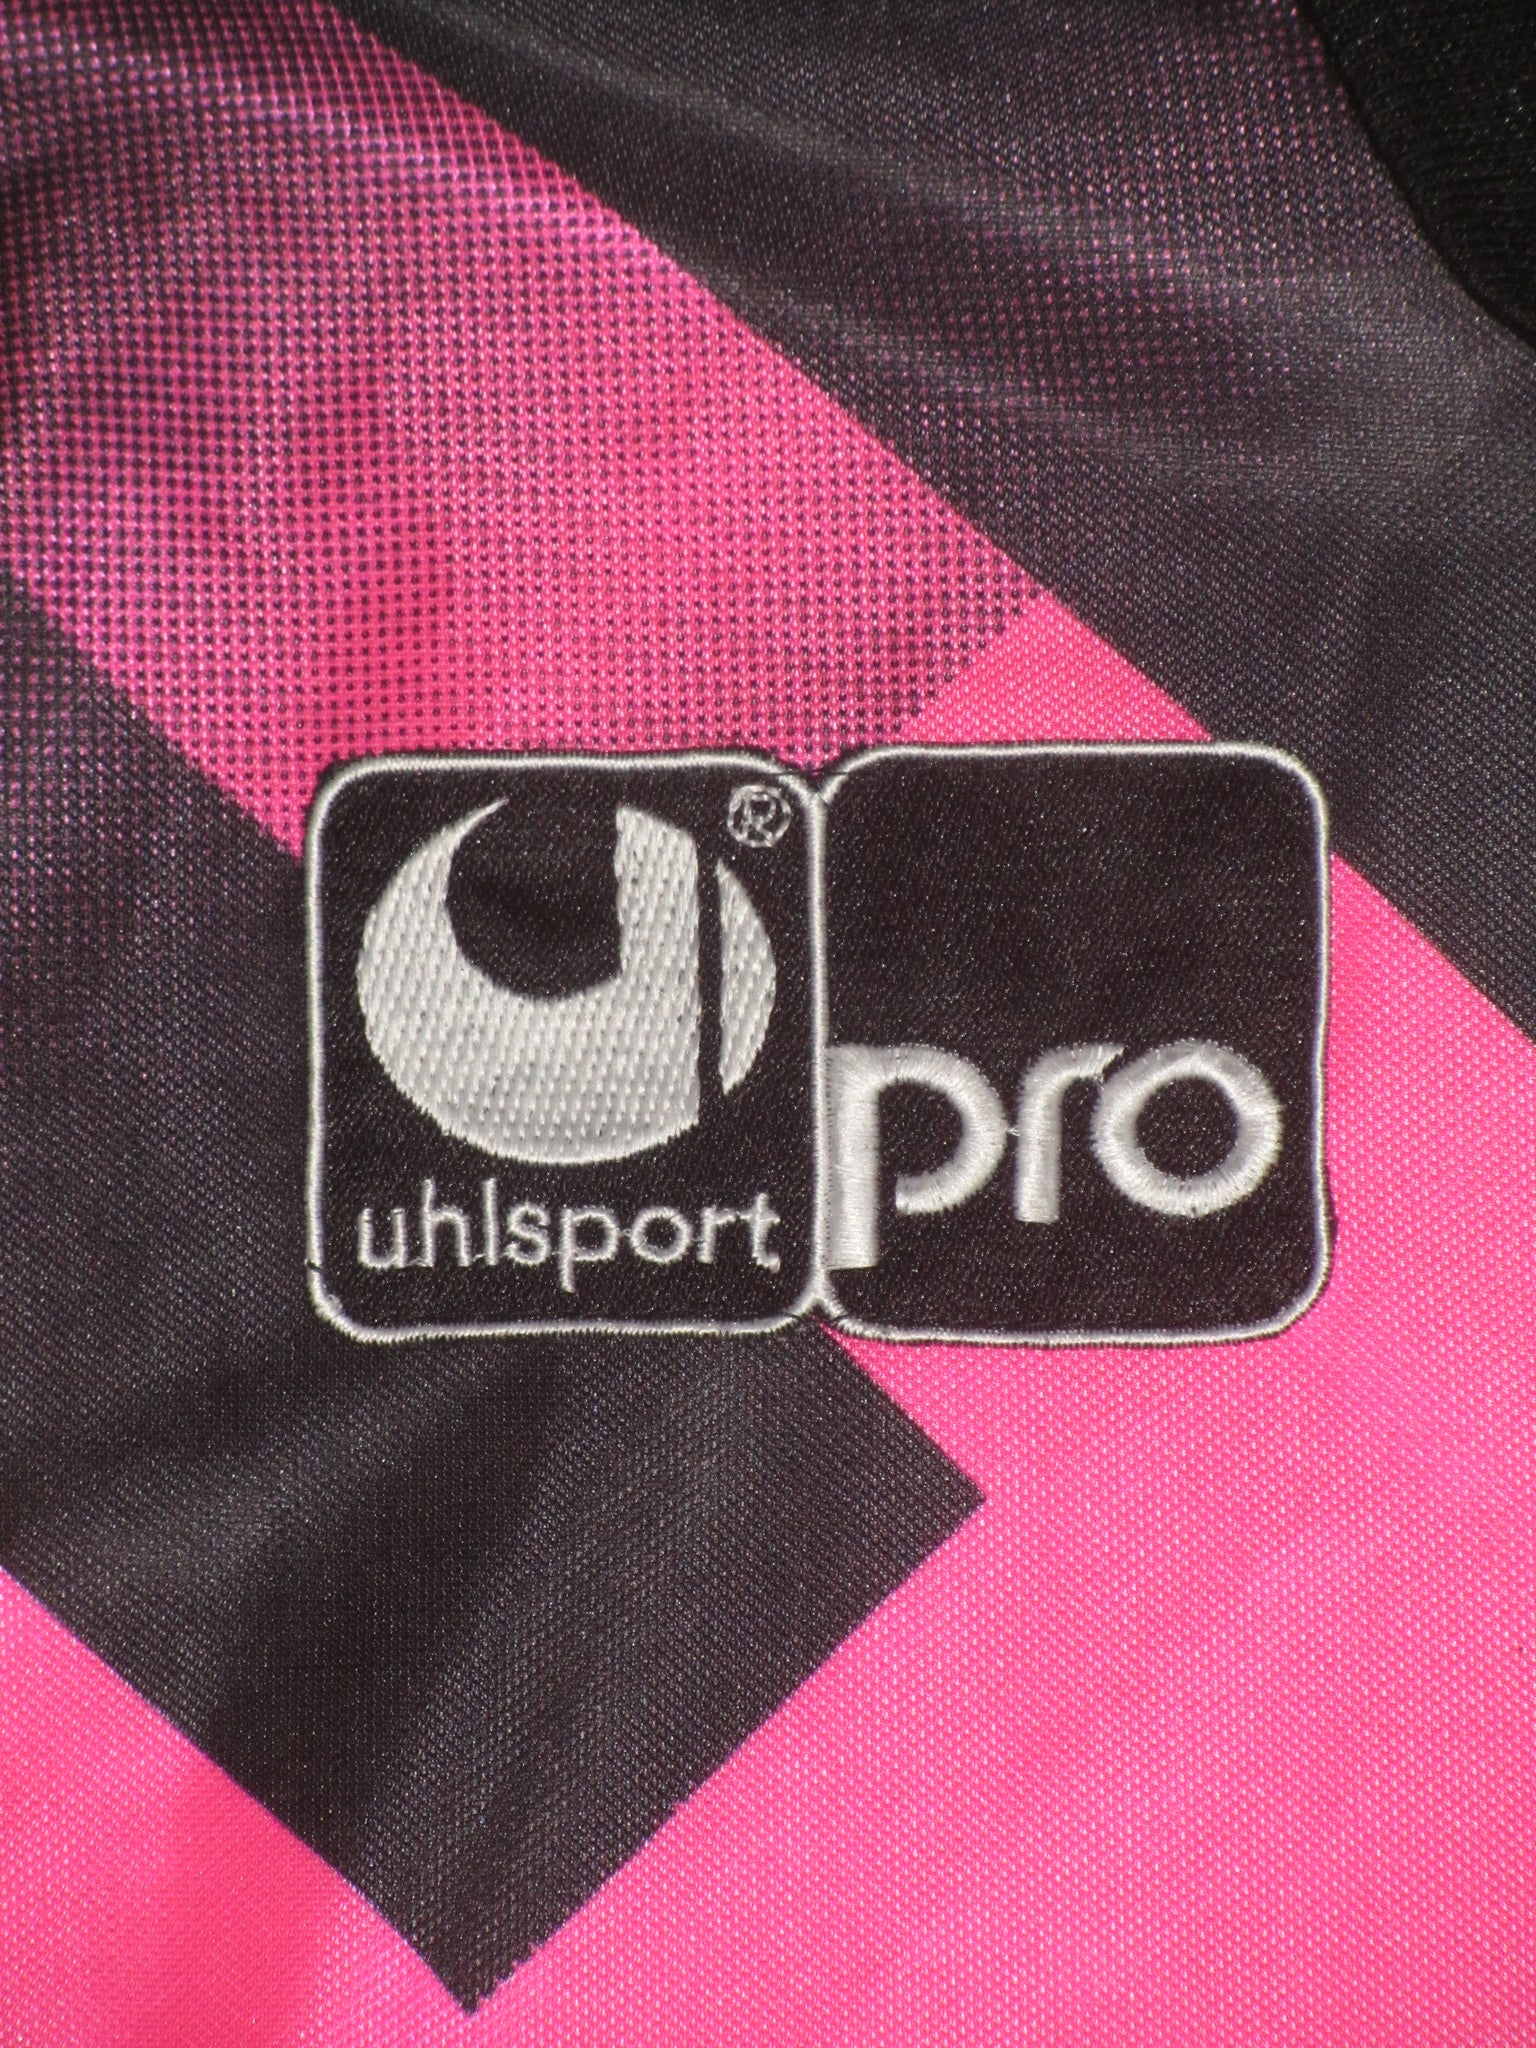 1992-93 Uhlsport Goalkeeper jersey *BNWT* LEOPARD - L & XL